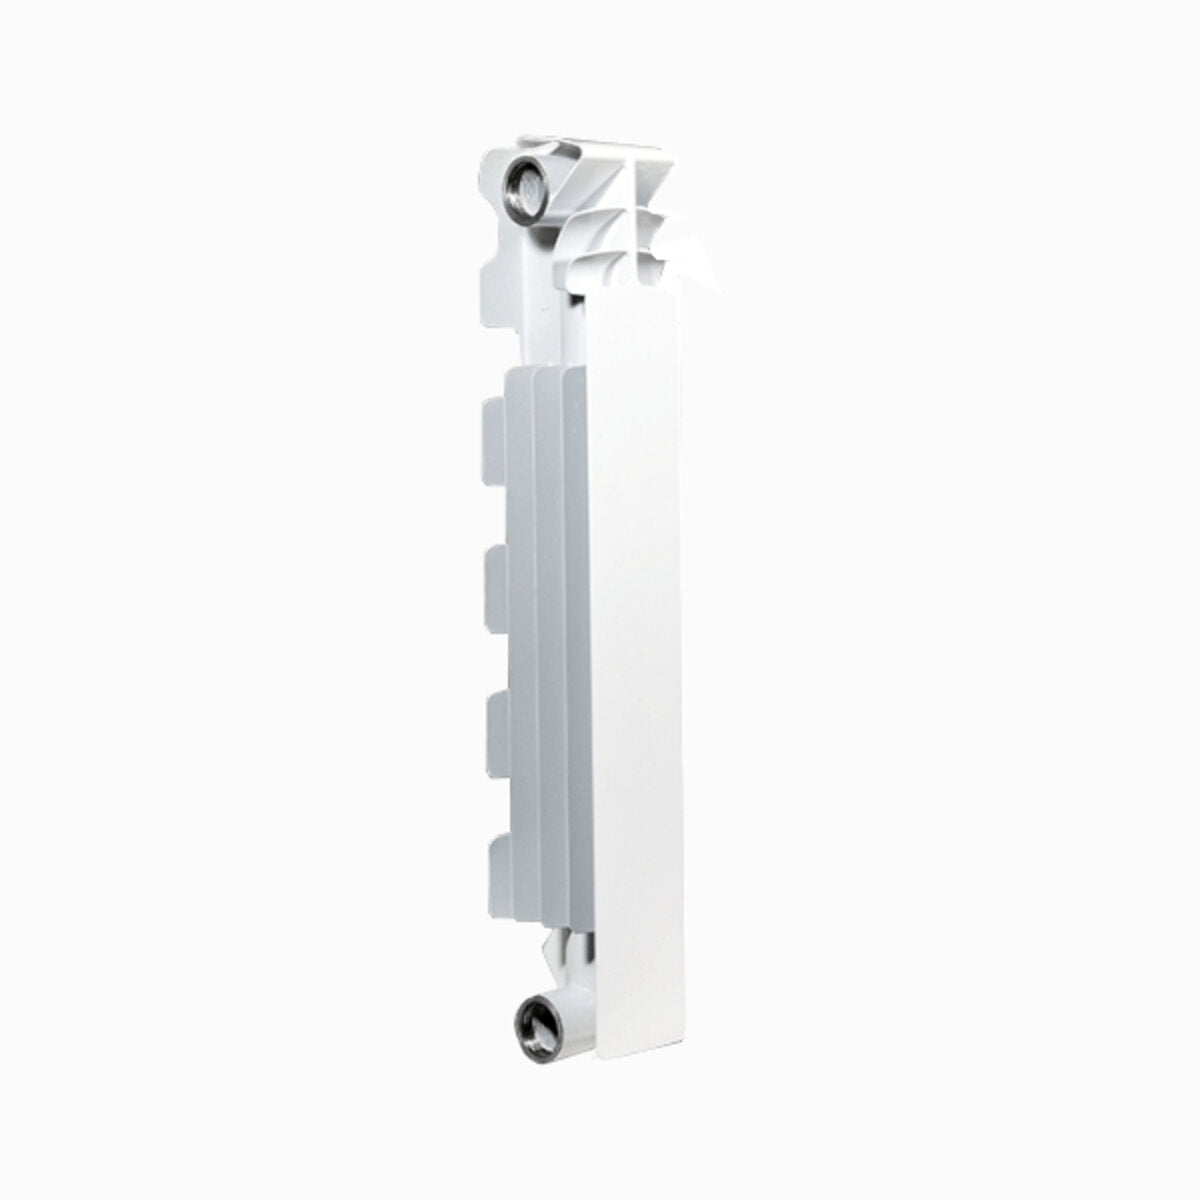 Fondital radiator in die-cast aluminum exclusive B4 single element center distance 350 mm